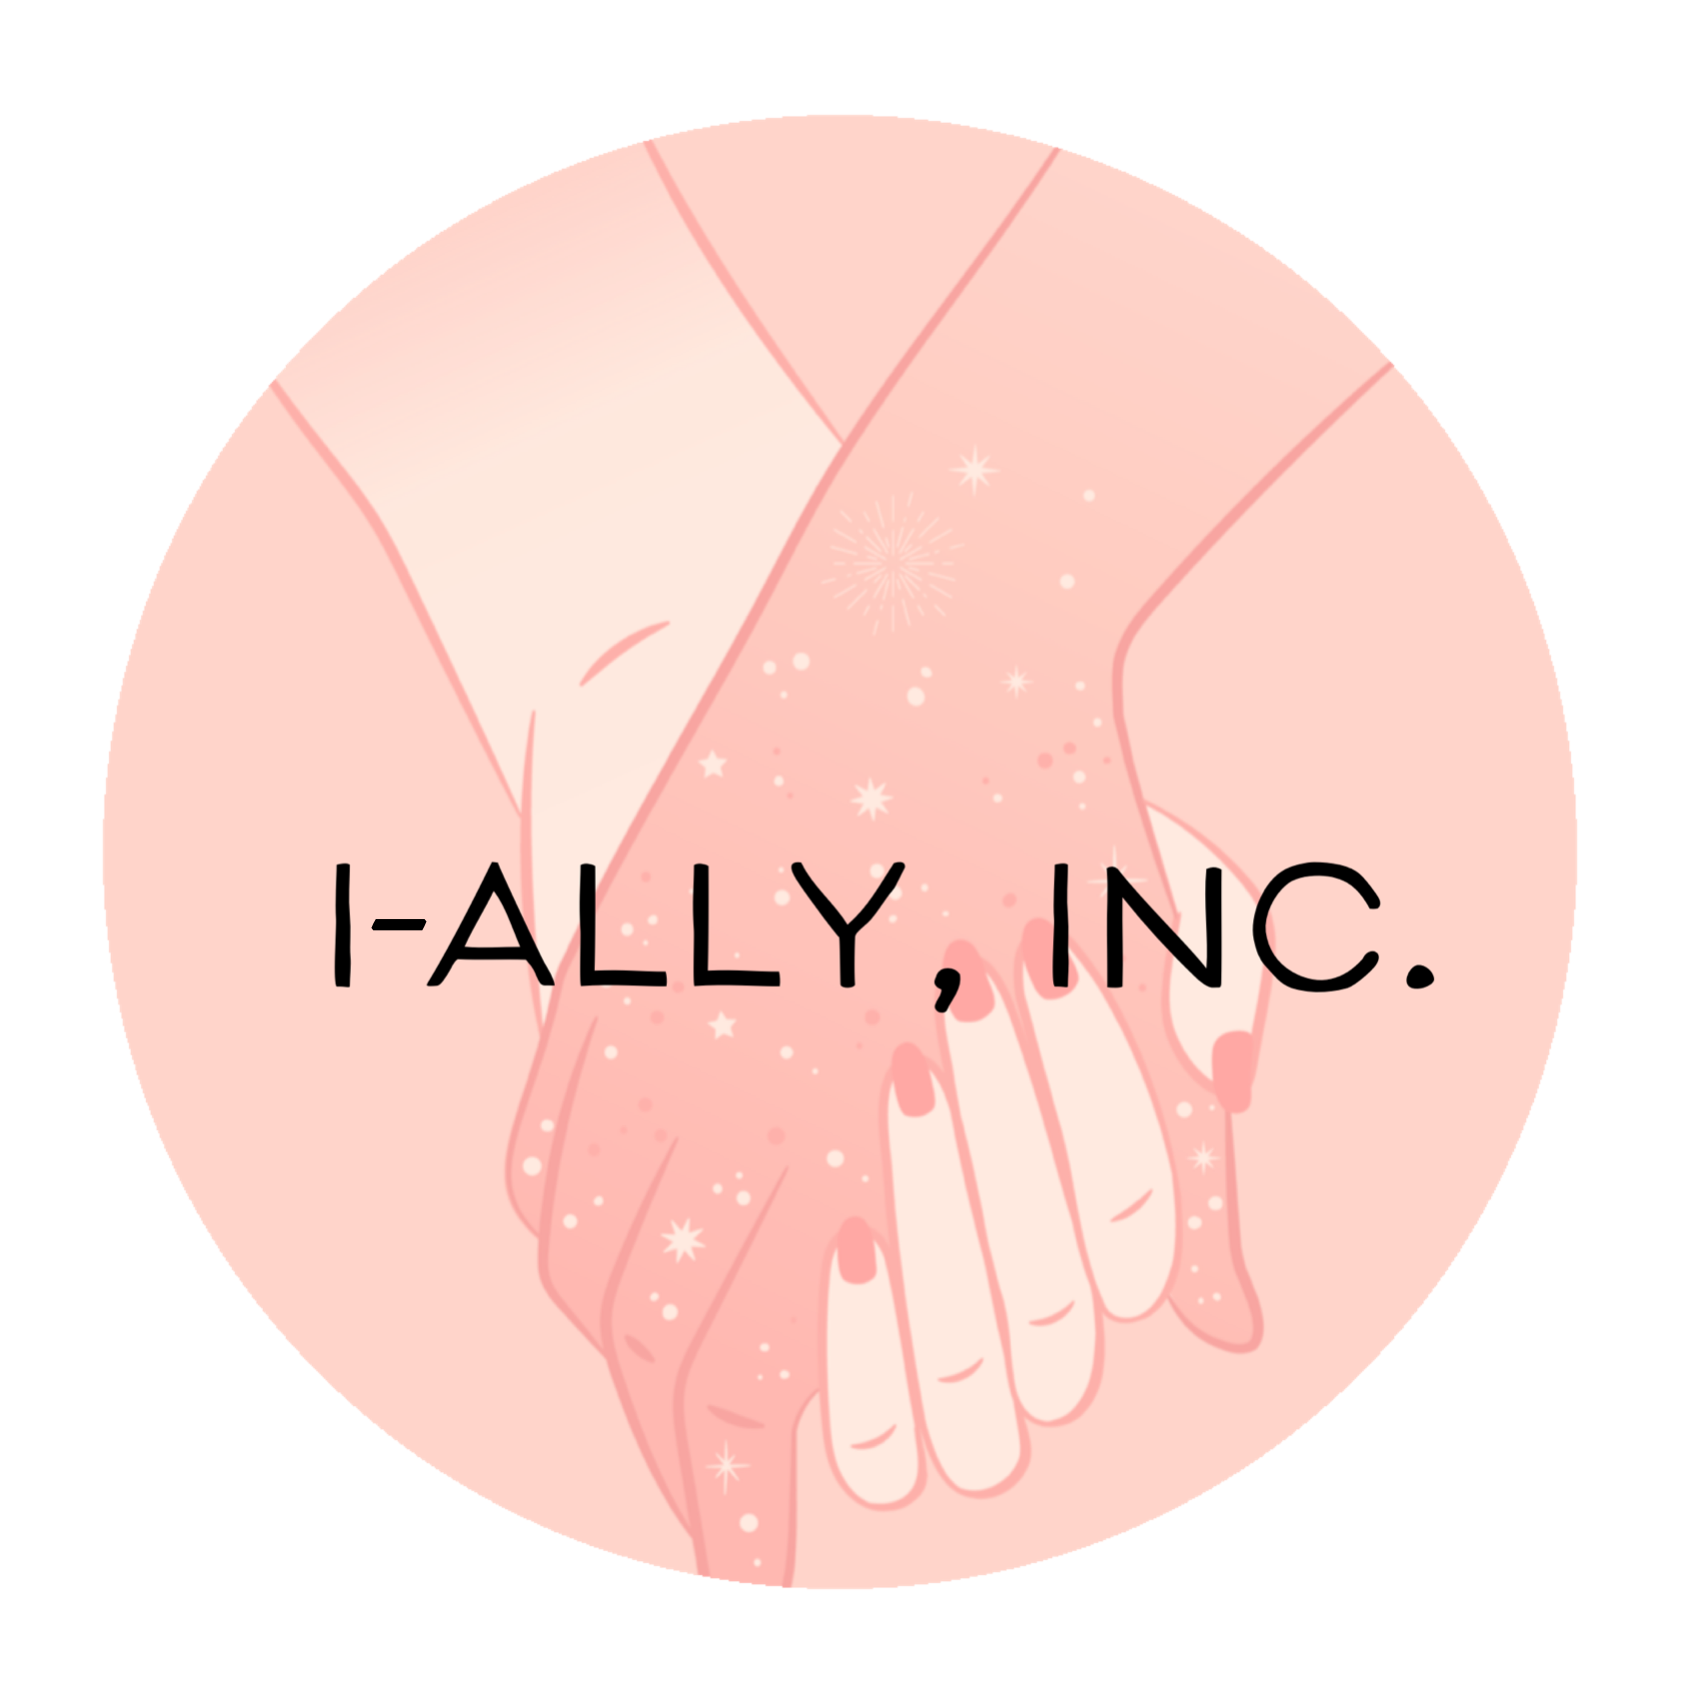 Logo of I-Ally